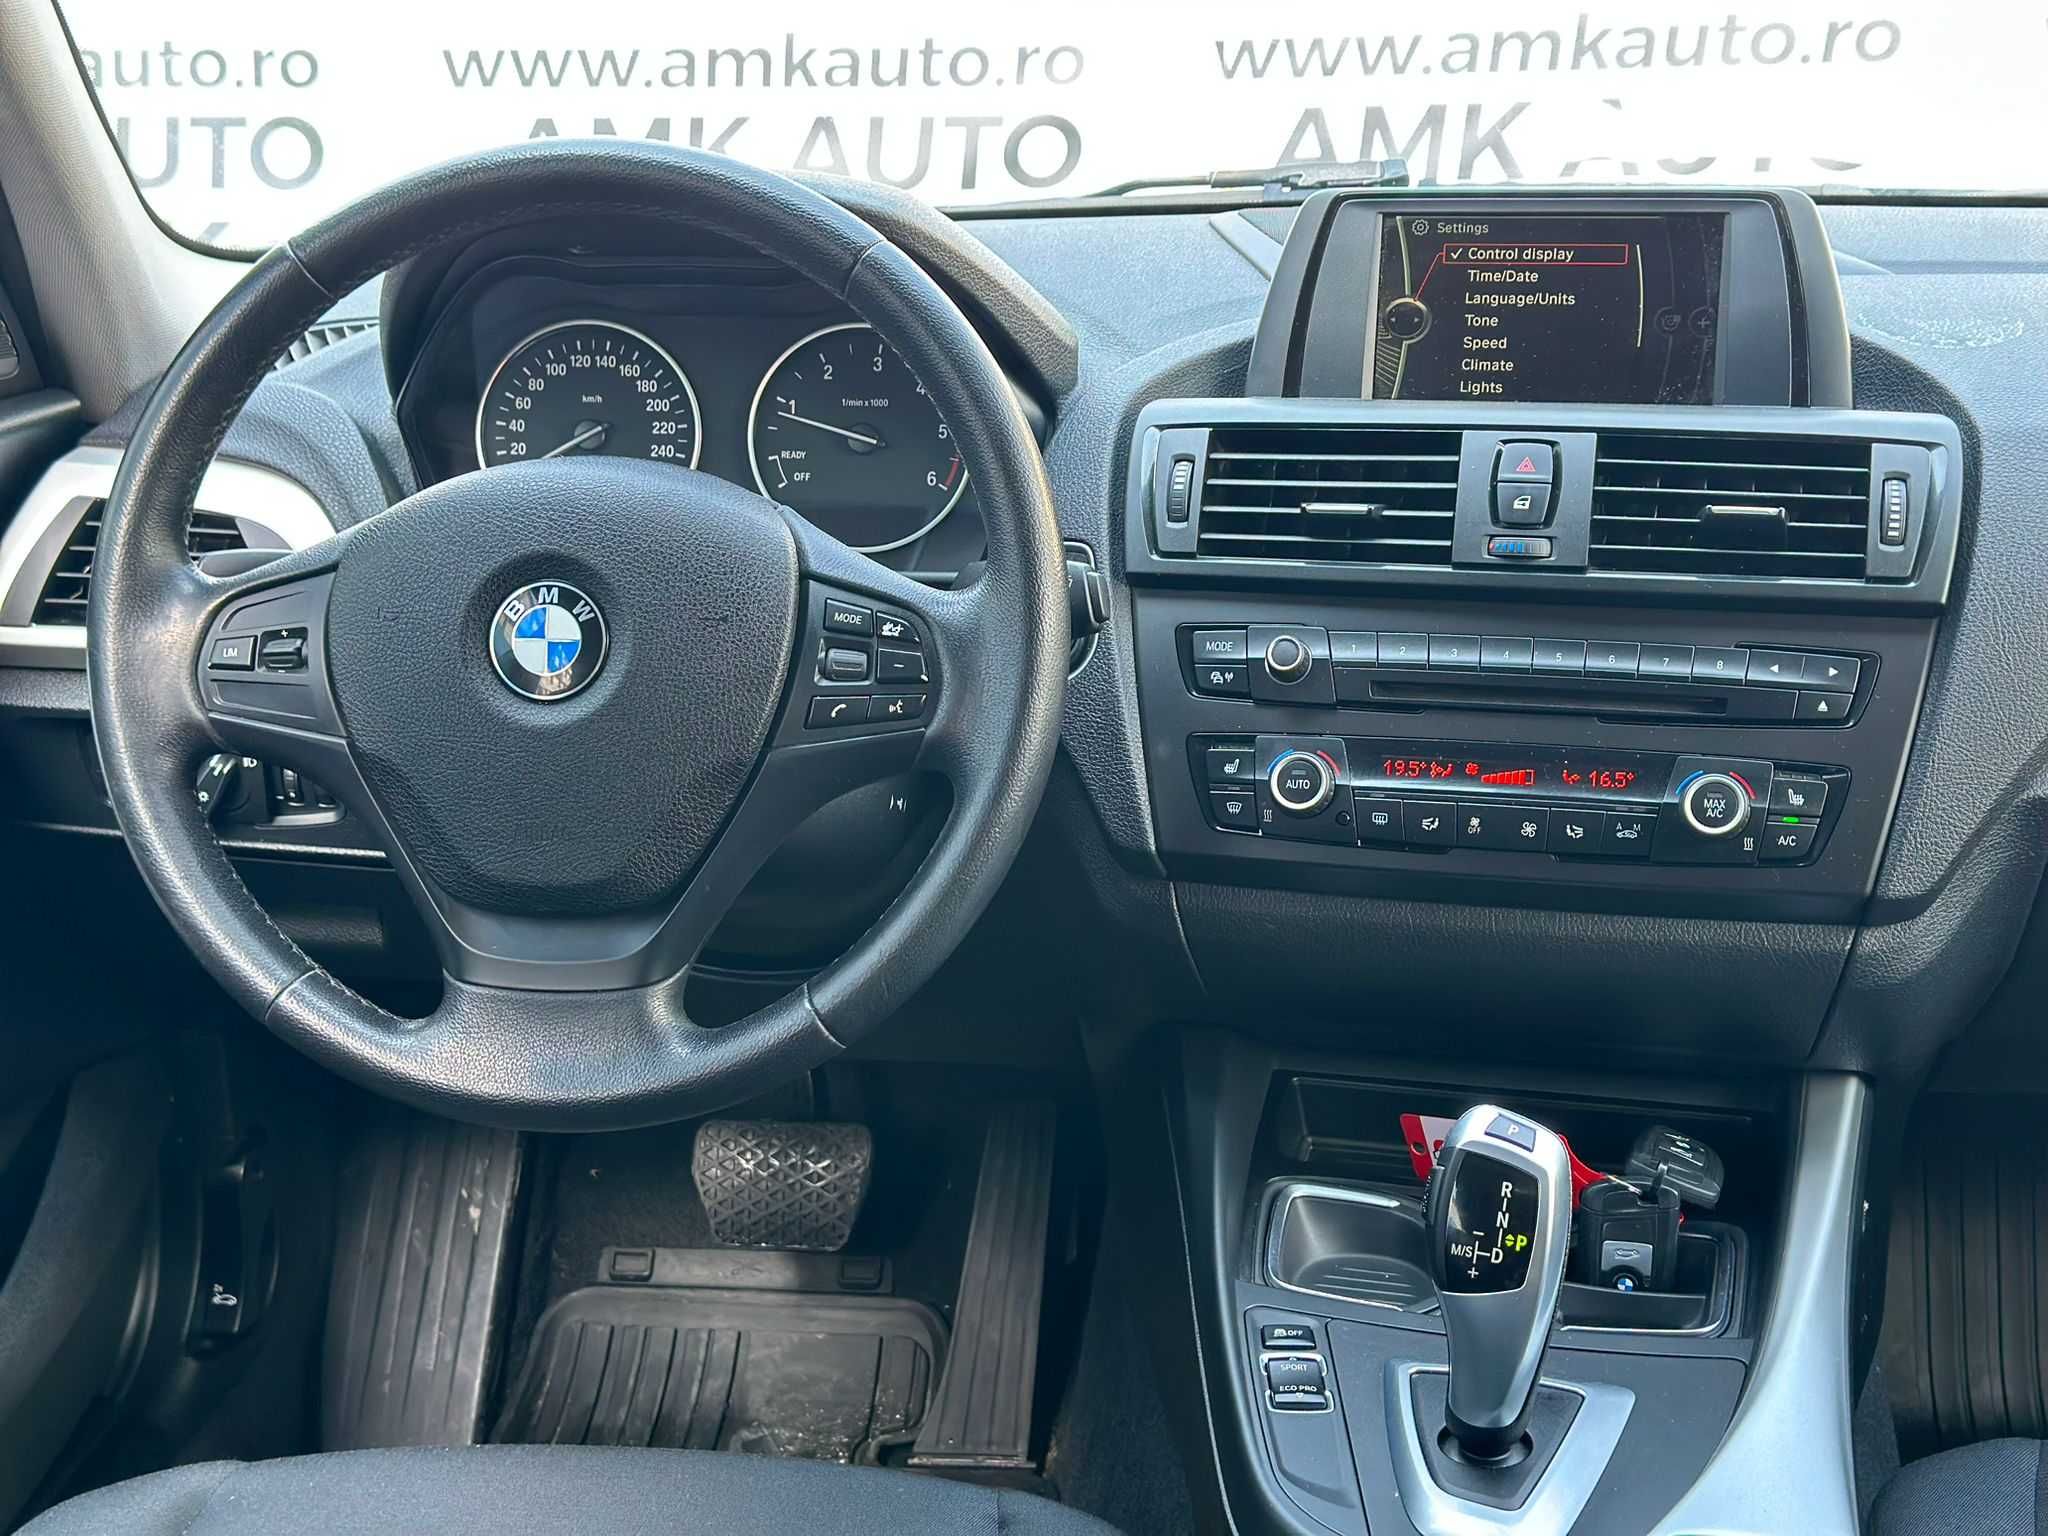 BMW 118d-2012-2.0 diesel-Cutie automata-Euro 5/Rate avans 0-Garantie